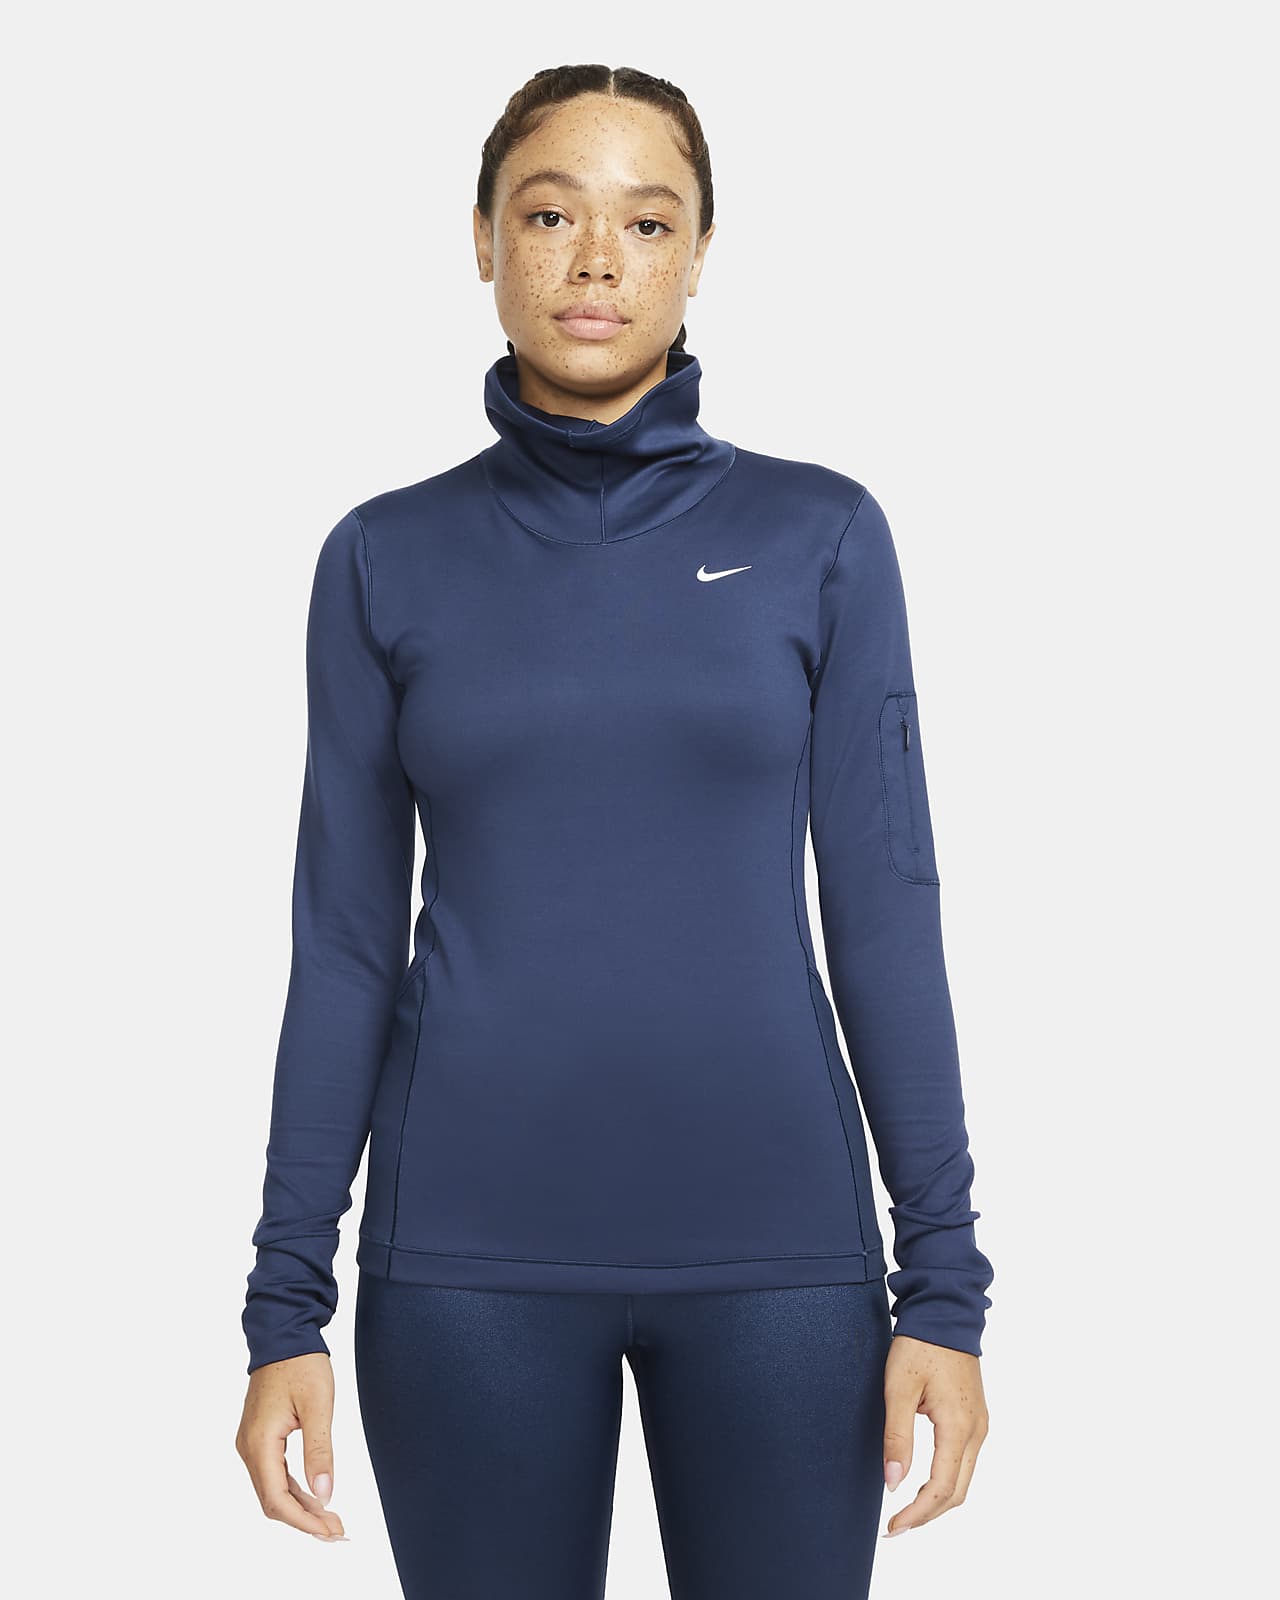 Nike Therma-FIT Women's Long-Sleeve Top. Nike.com